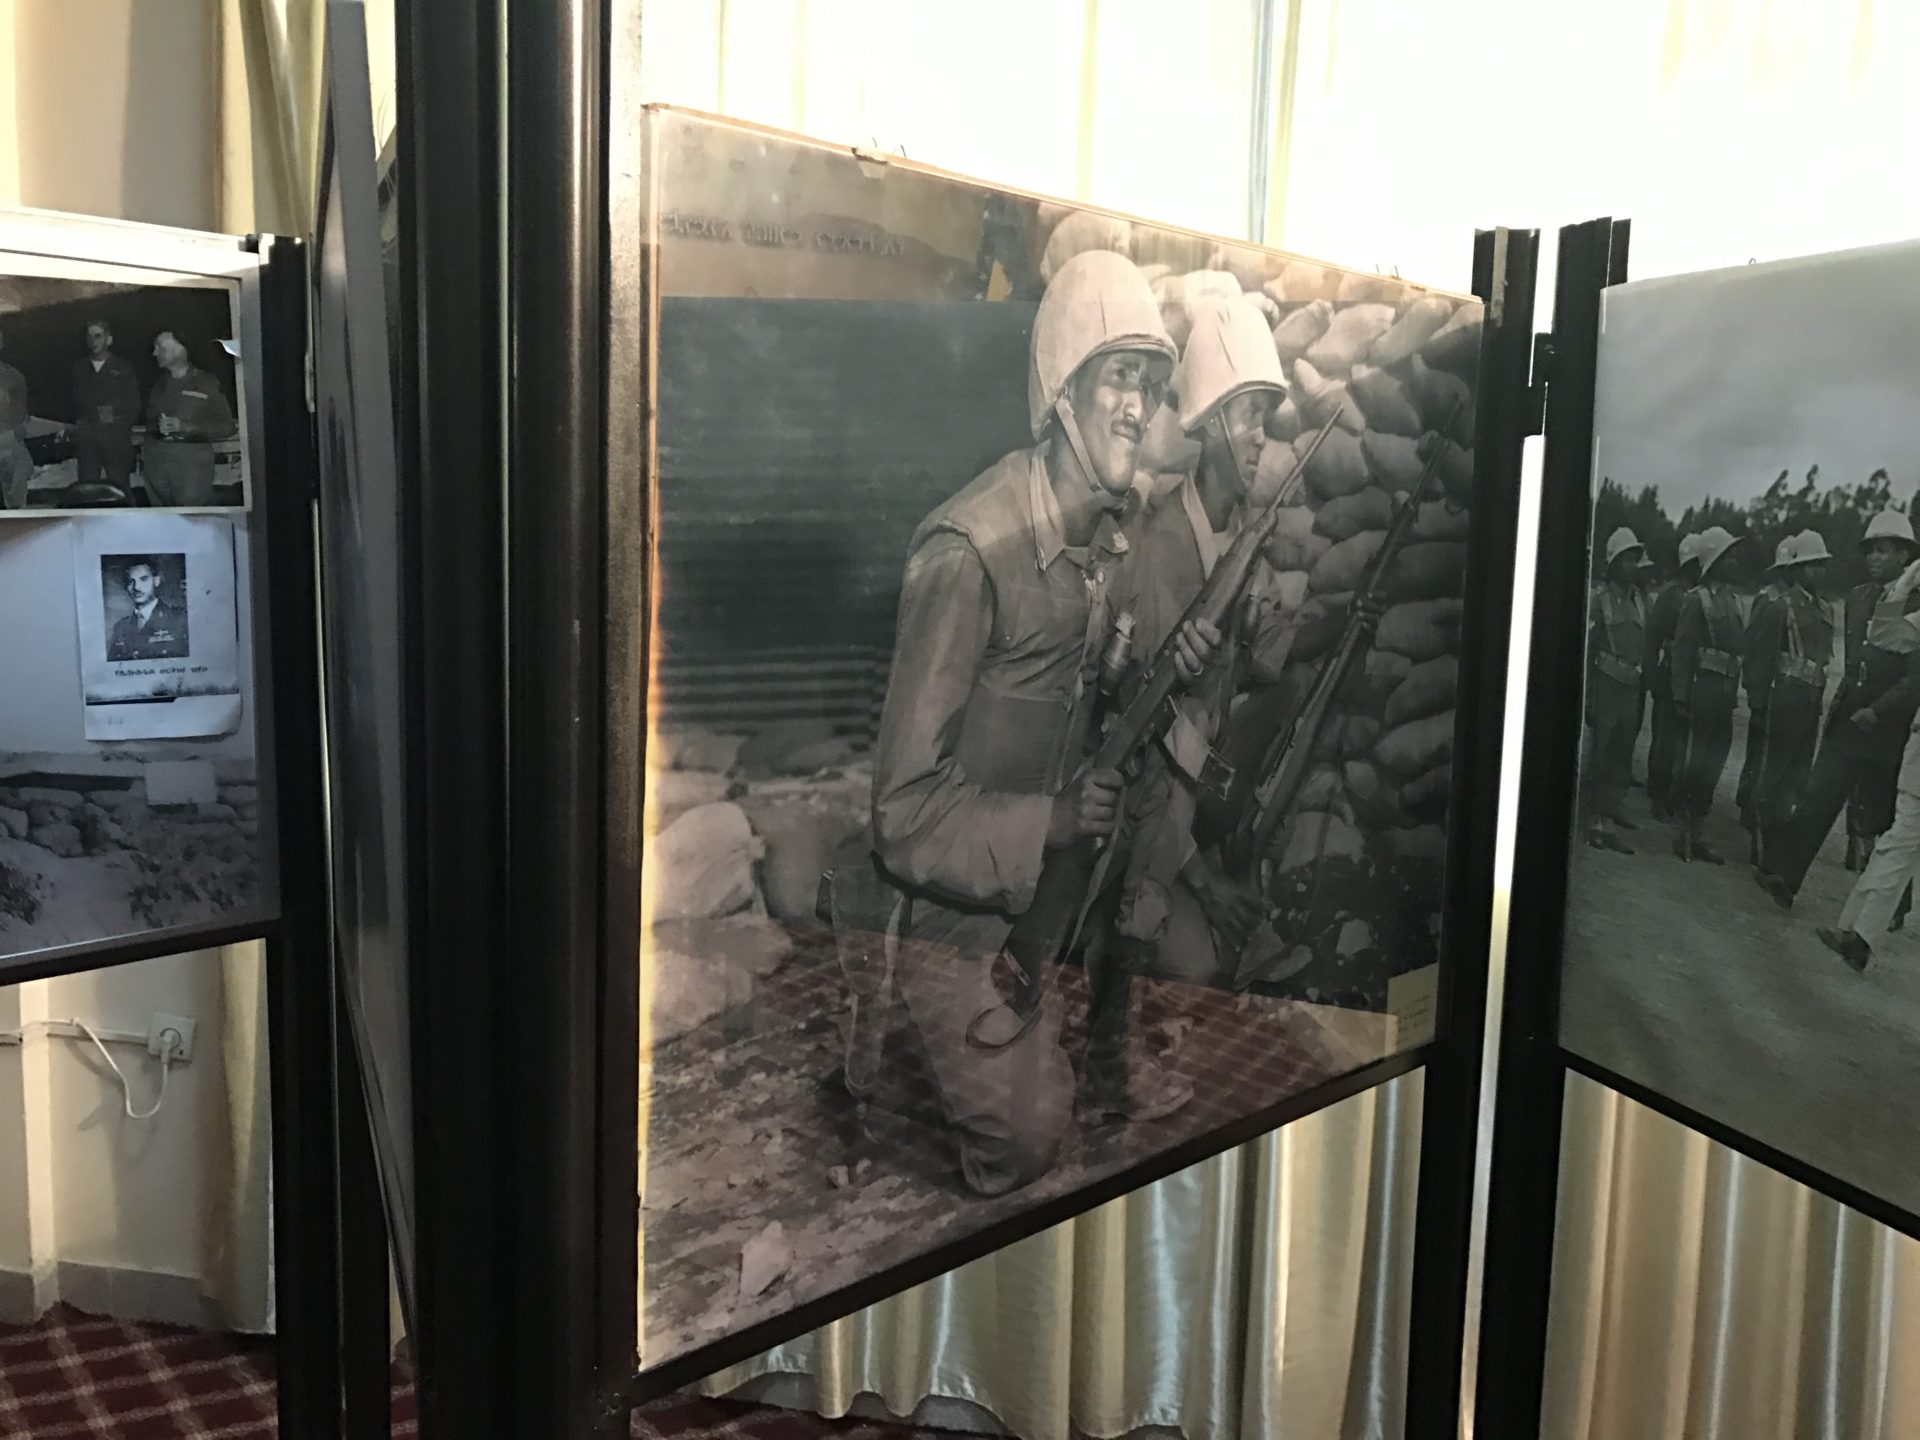 Korean War Memorials - Addis Ababa - Ethiopia